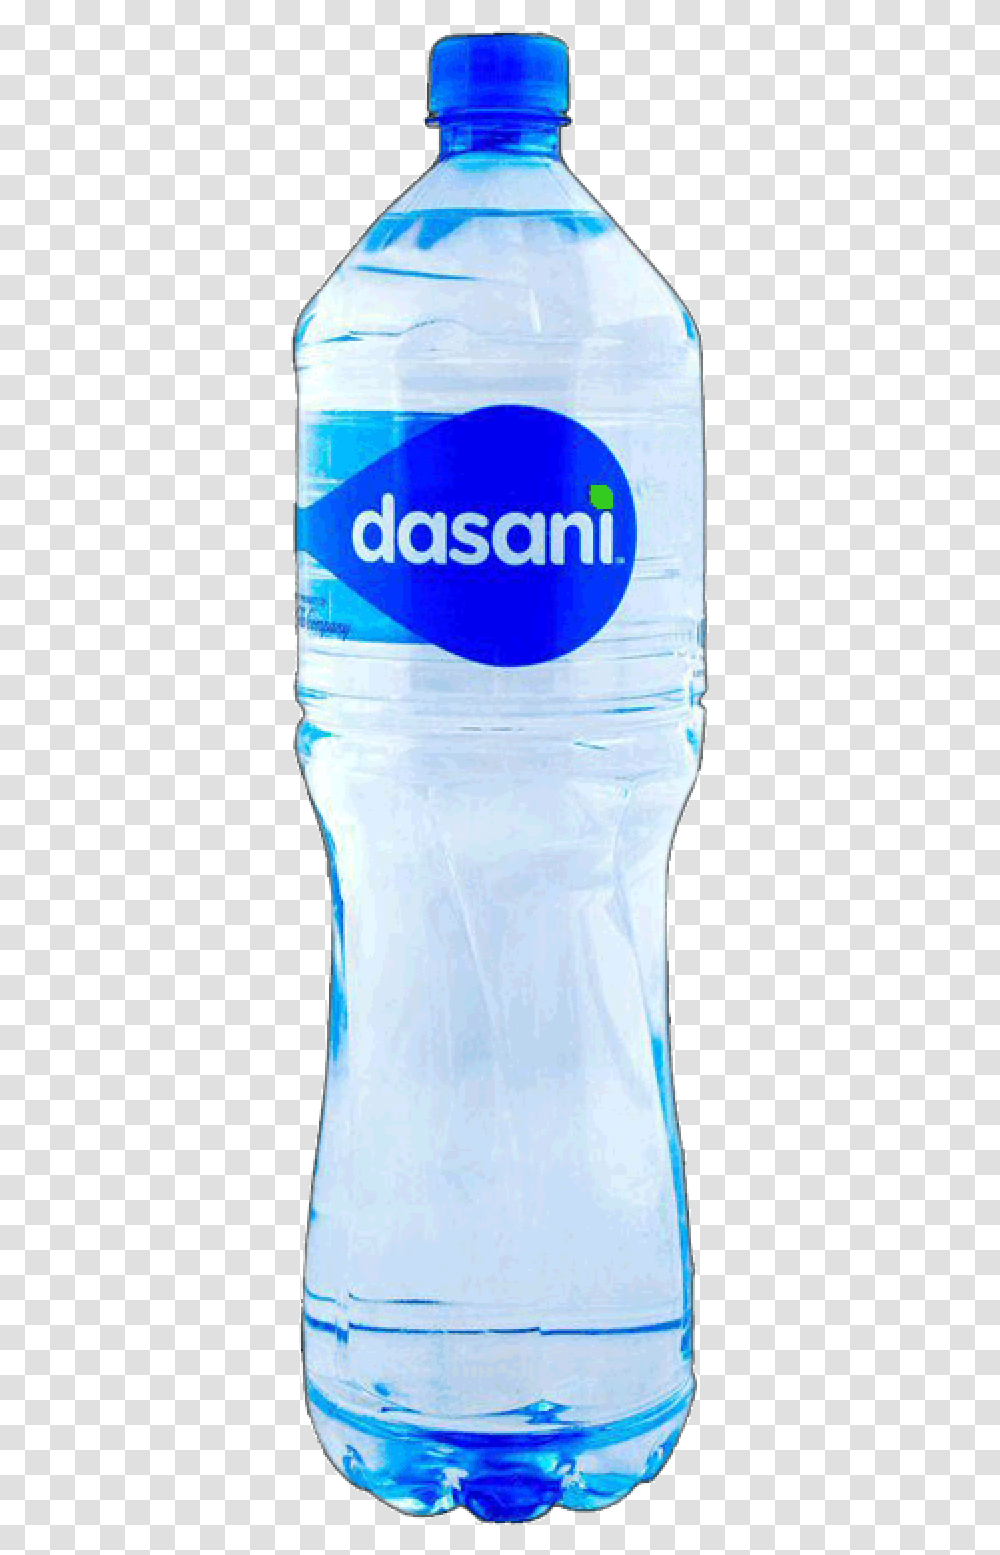 Dasani Water Bottle New Dasani Water Bottle, Mineral Water, Beverage, Drink, Milk Transparent Png